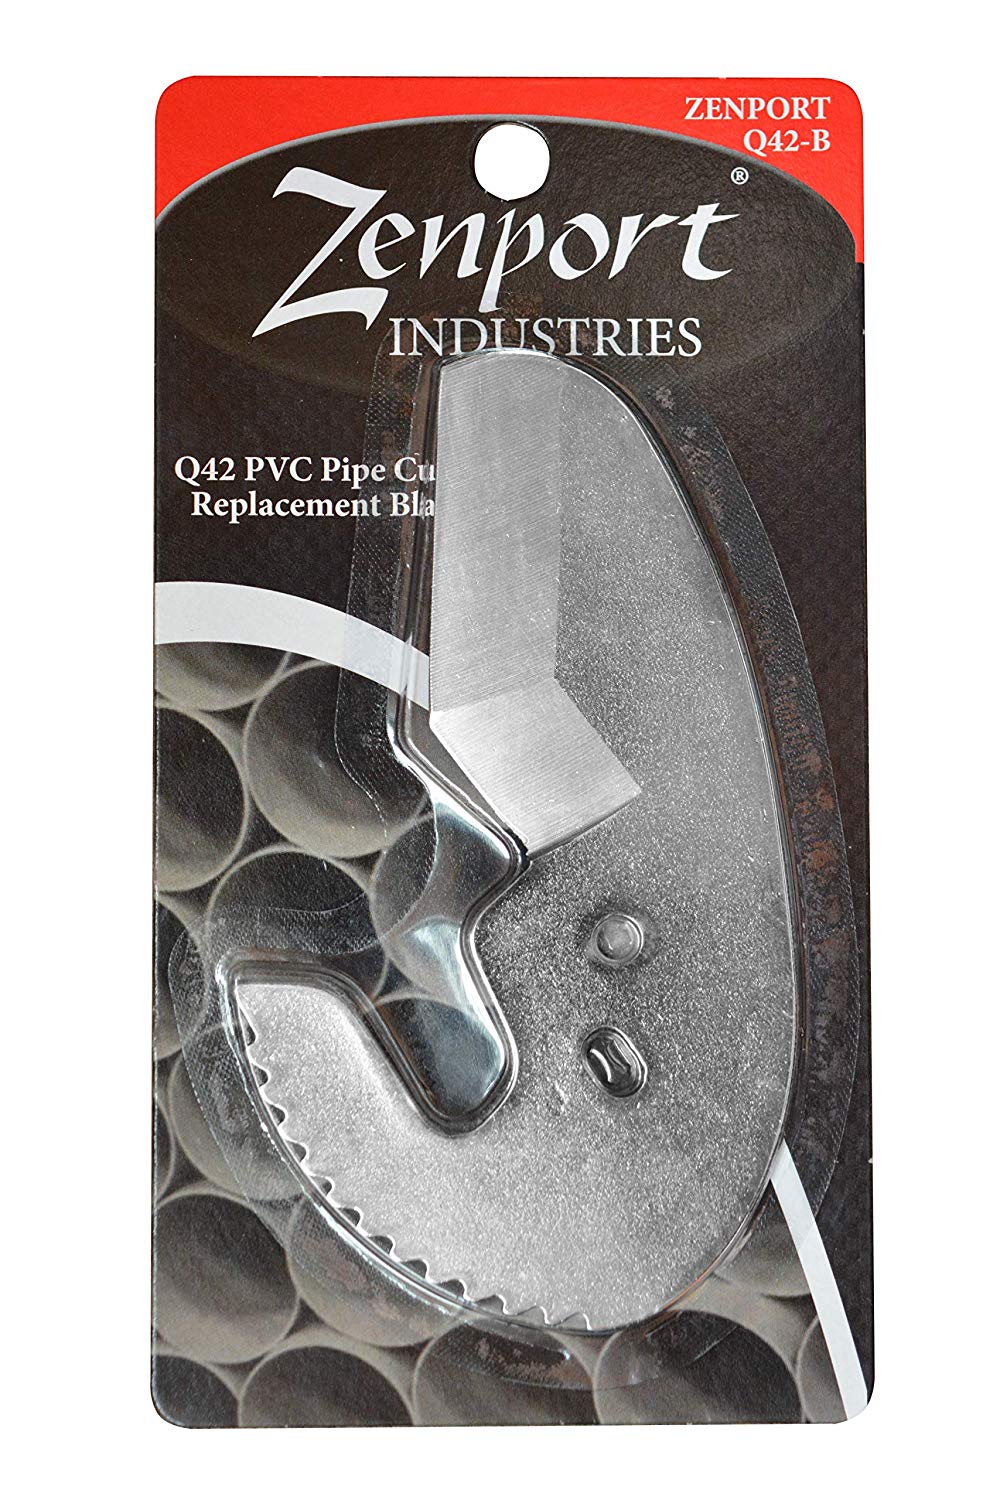 Zenport Pruner Blade Q42-B 1.65-inch Cut PVC Pipe Cutter Blade